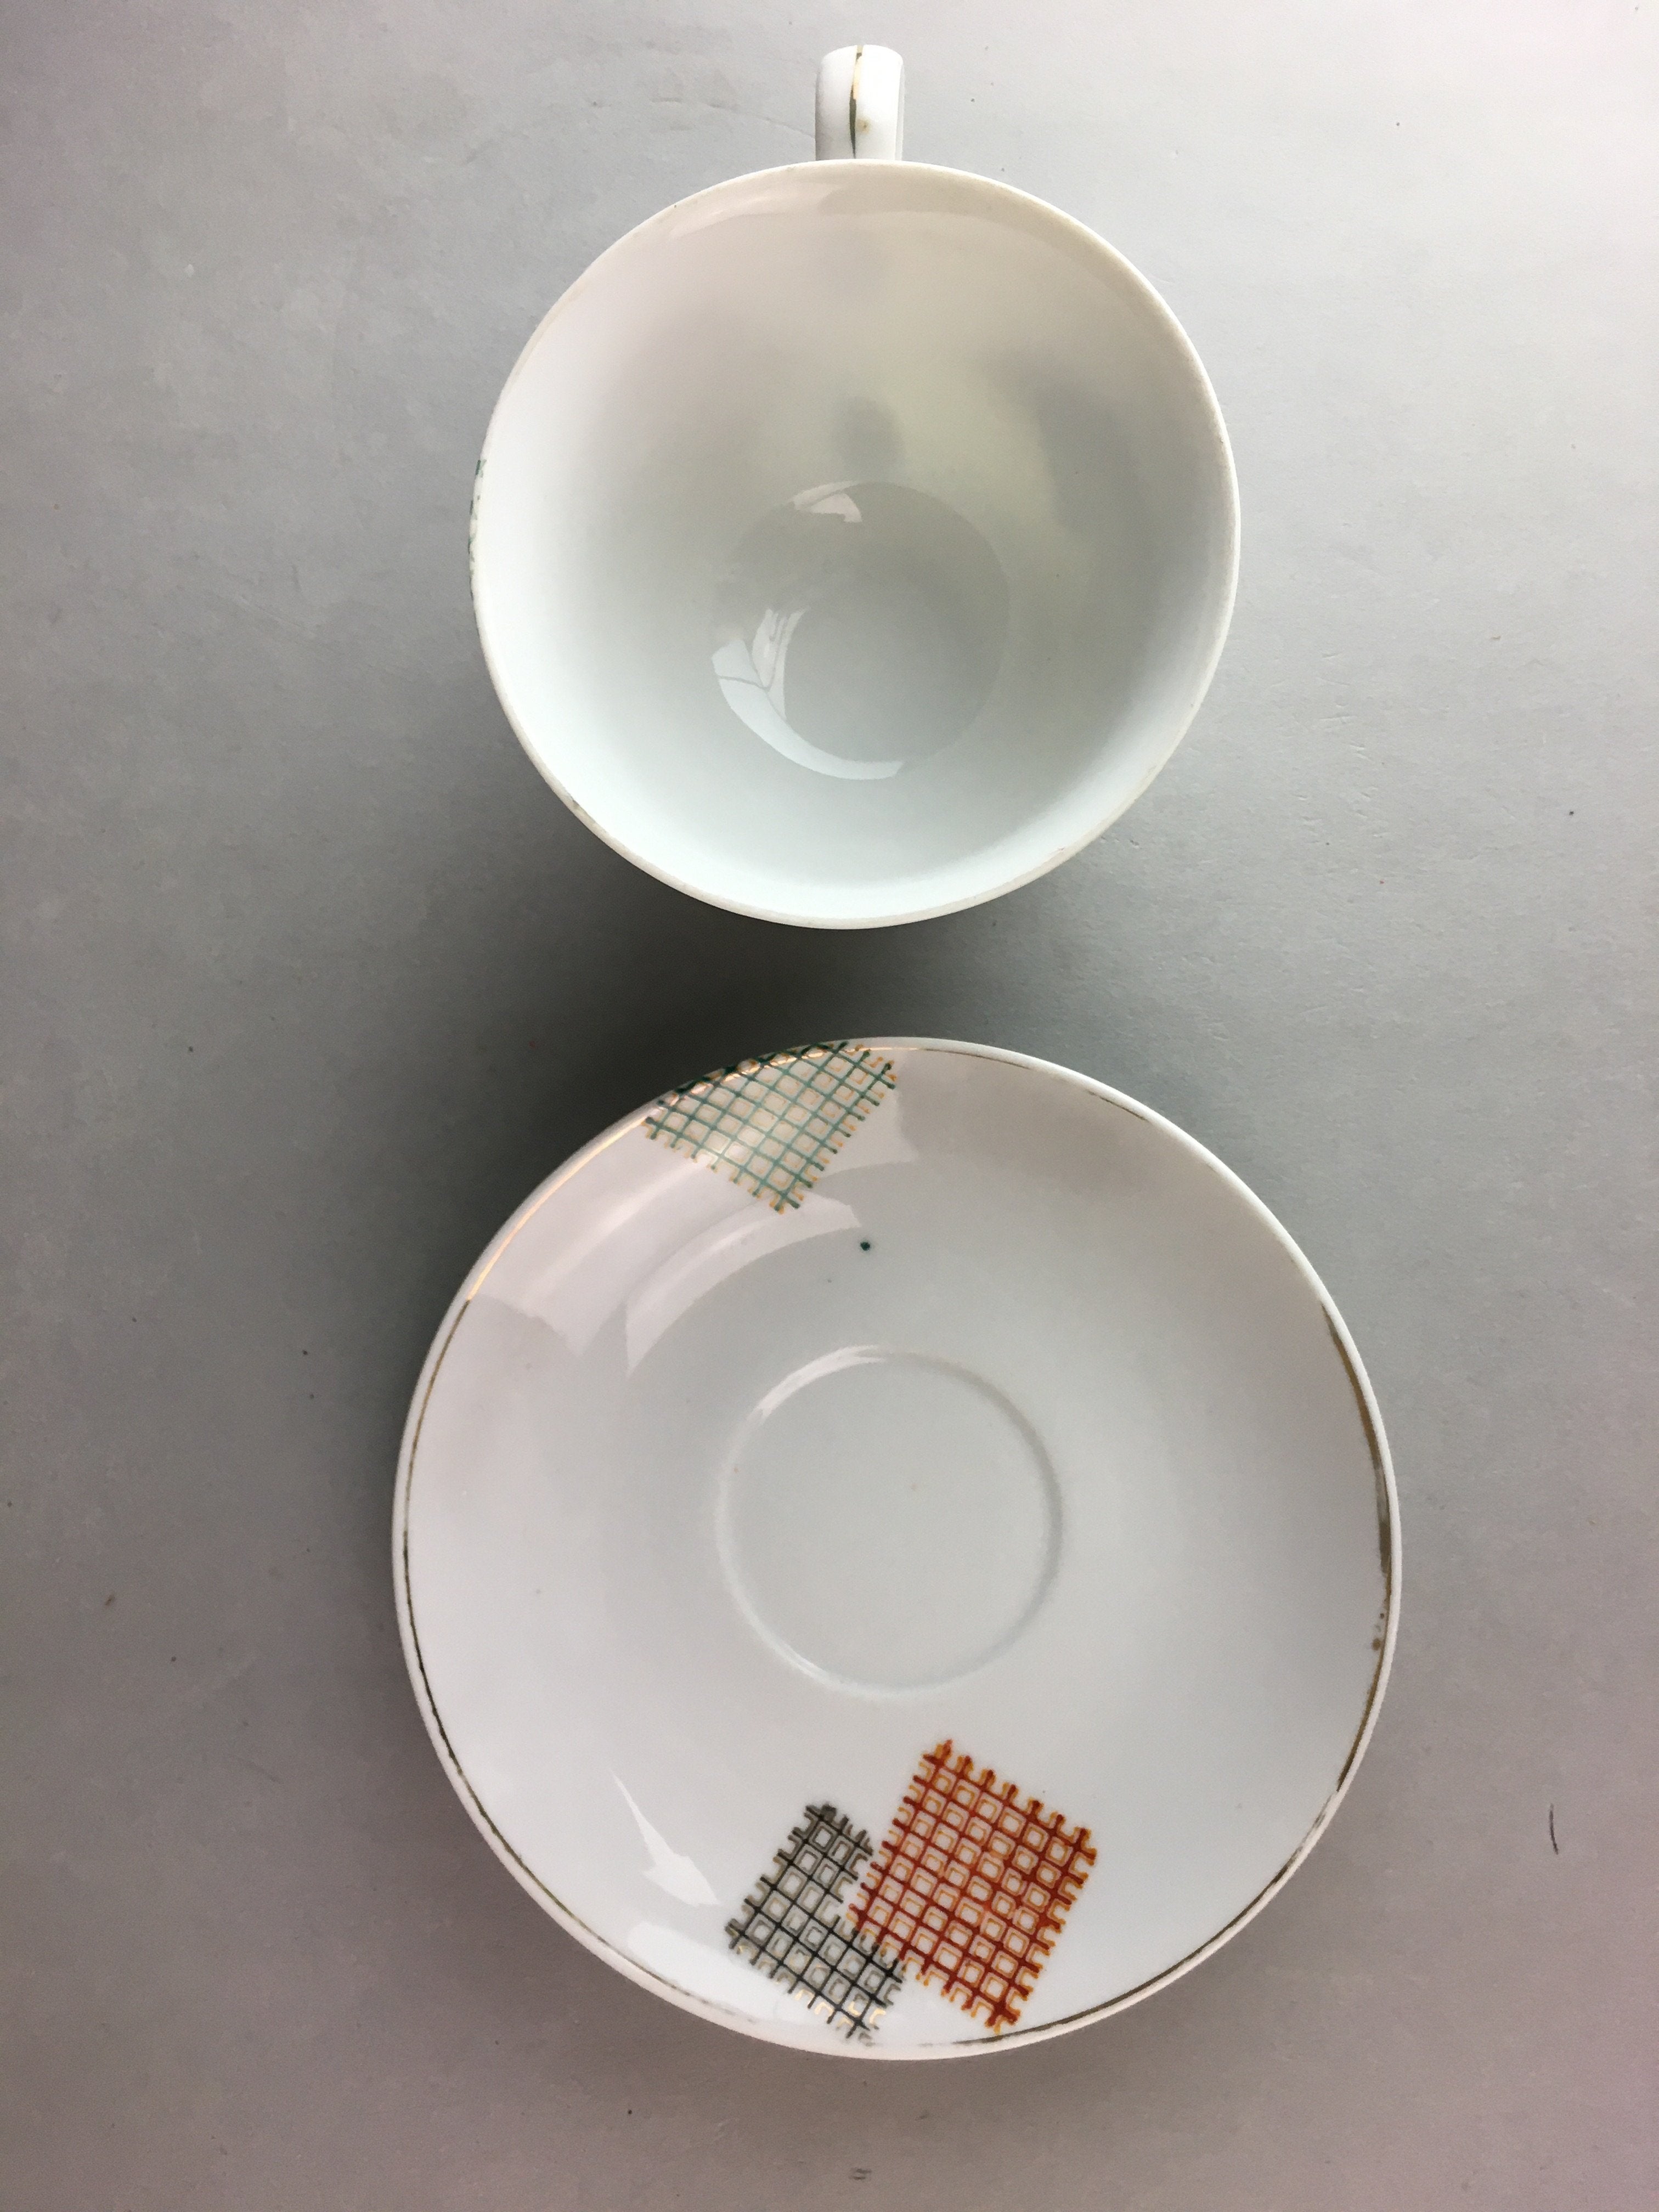 Japanese Porcelain Teacup Mug Saucer Vtg Yunomi Plate Set Plaid PP311